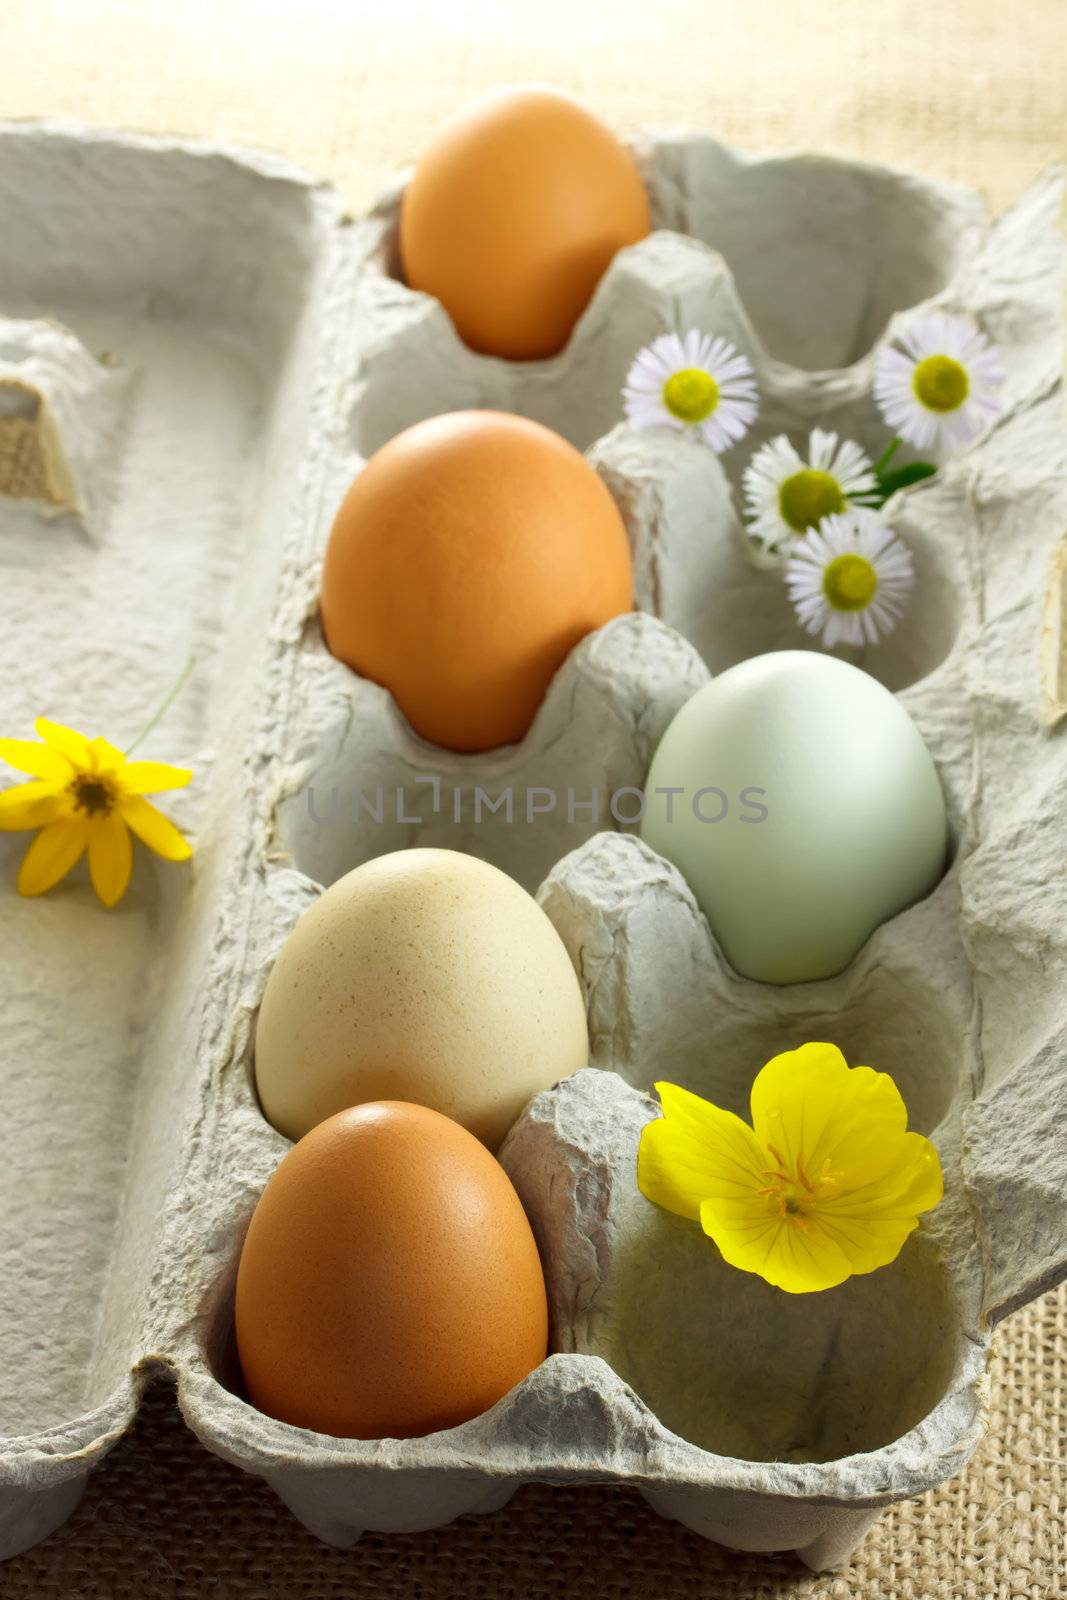 Organic colorful eggs by melpomene